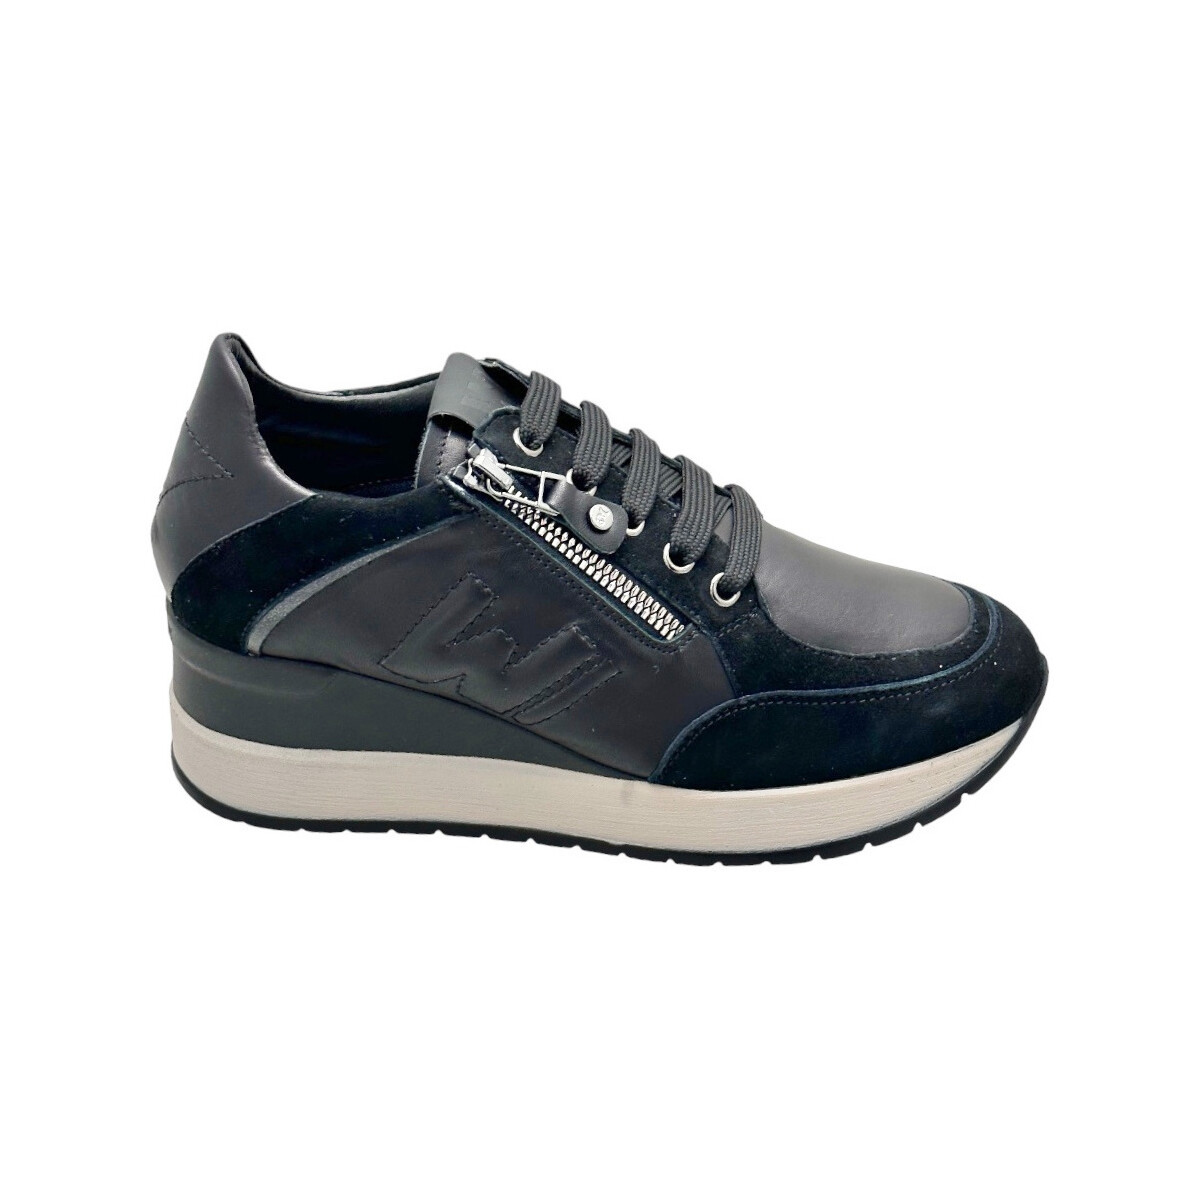 Chaussures Baskets mode Melluso MWR25549ne Noir